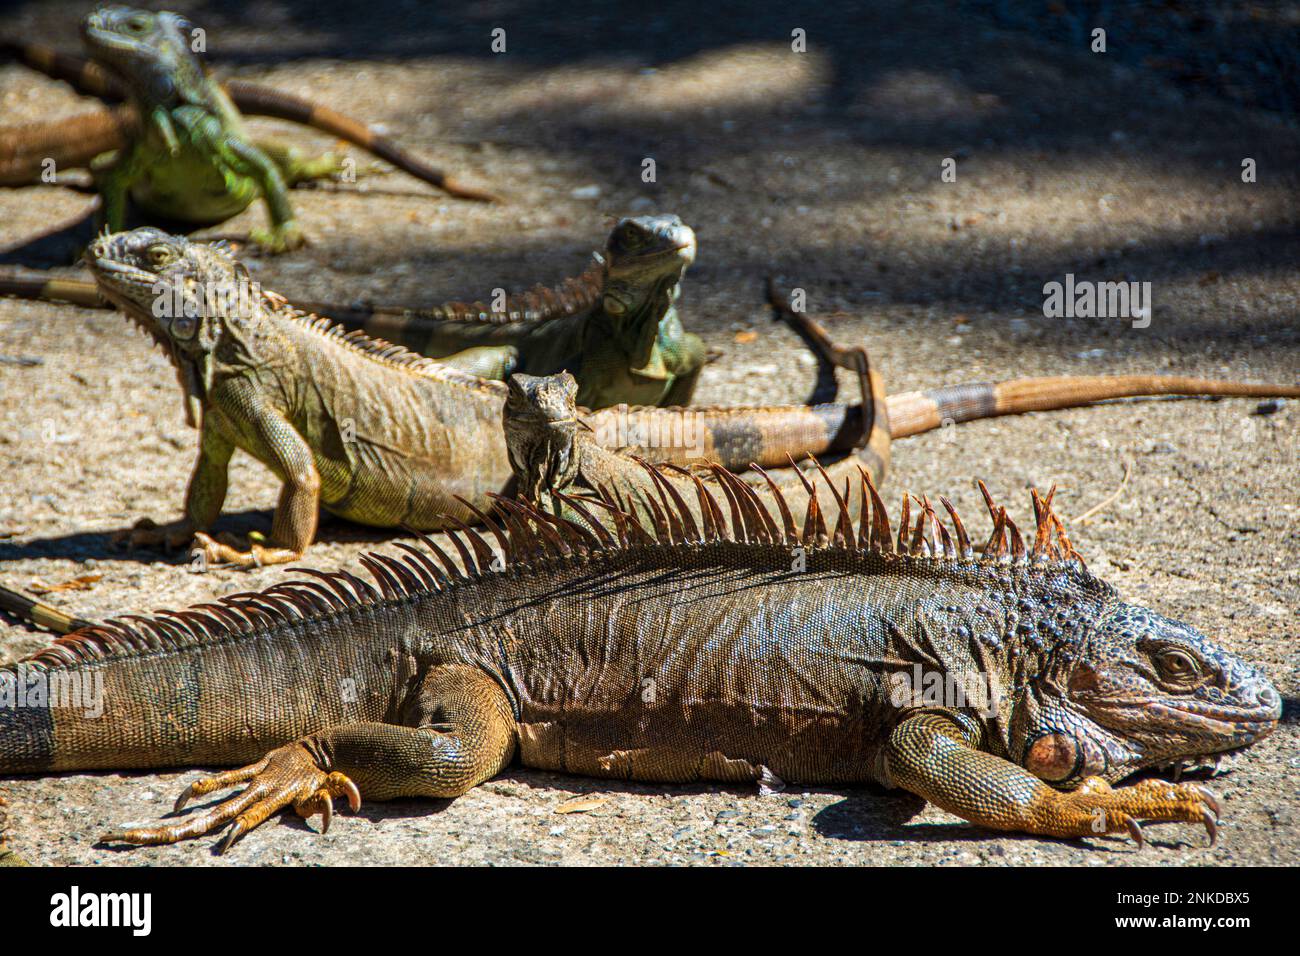 A group of six (6) iguanas sunning themselves, Arche's Iguana and Beach Resort. Roatan, Honduras. Stock Photo